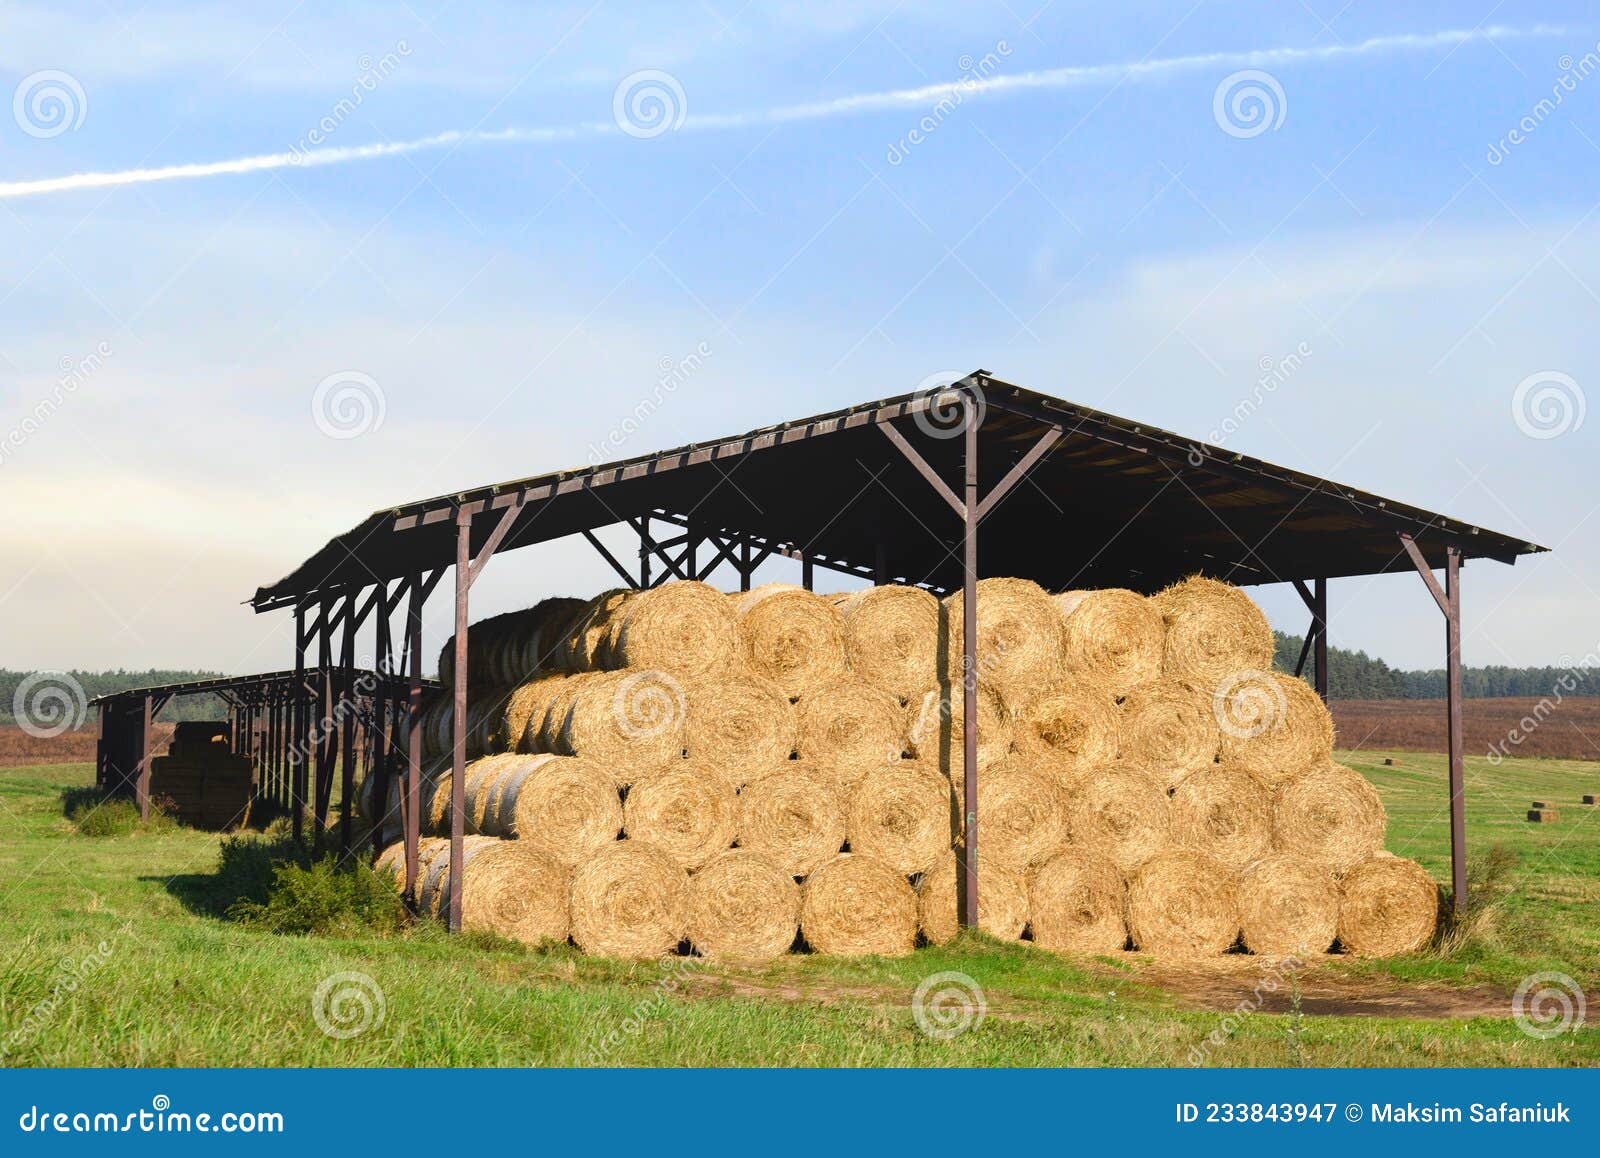 Hay Storage Barn in Field Near Farm. Haystacks Prepared for Animal Feed in  Winter. Stacks Dry Hay in Hangar Storage Stock Image - Image of haystacks,  animal: 233843947